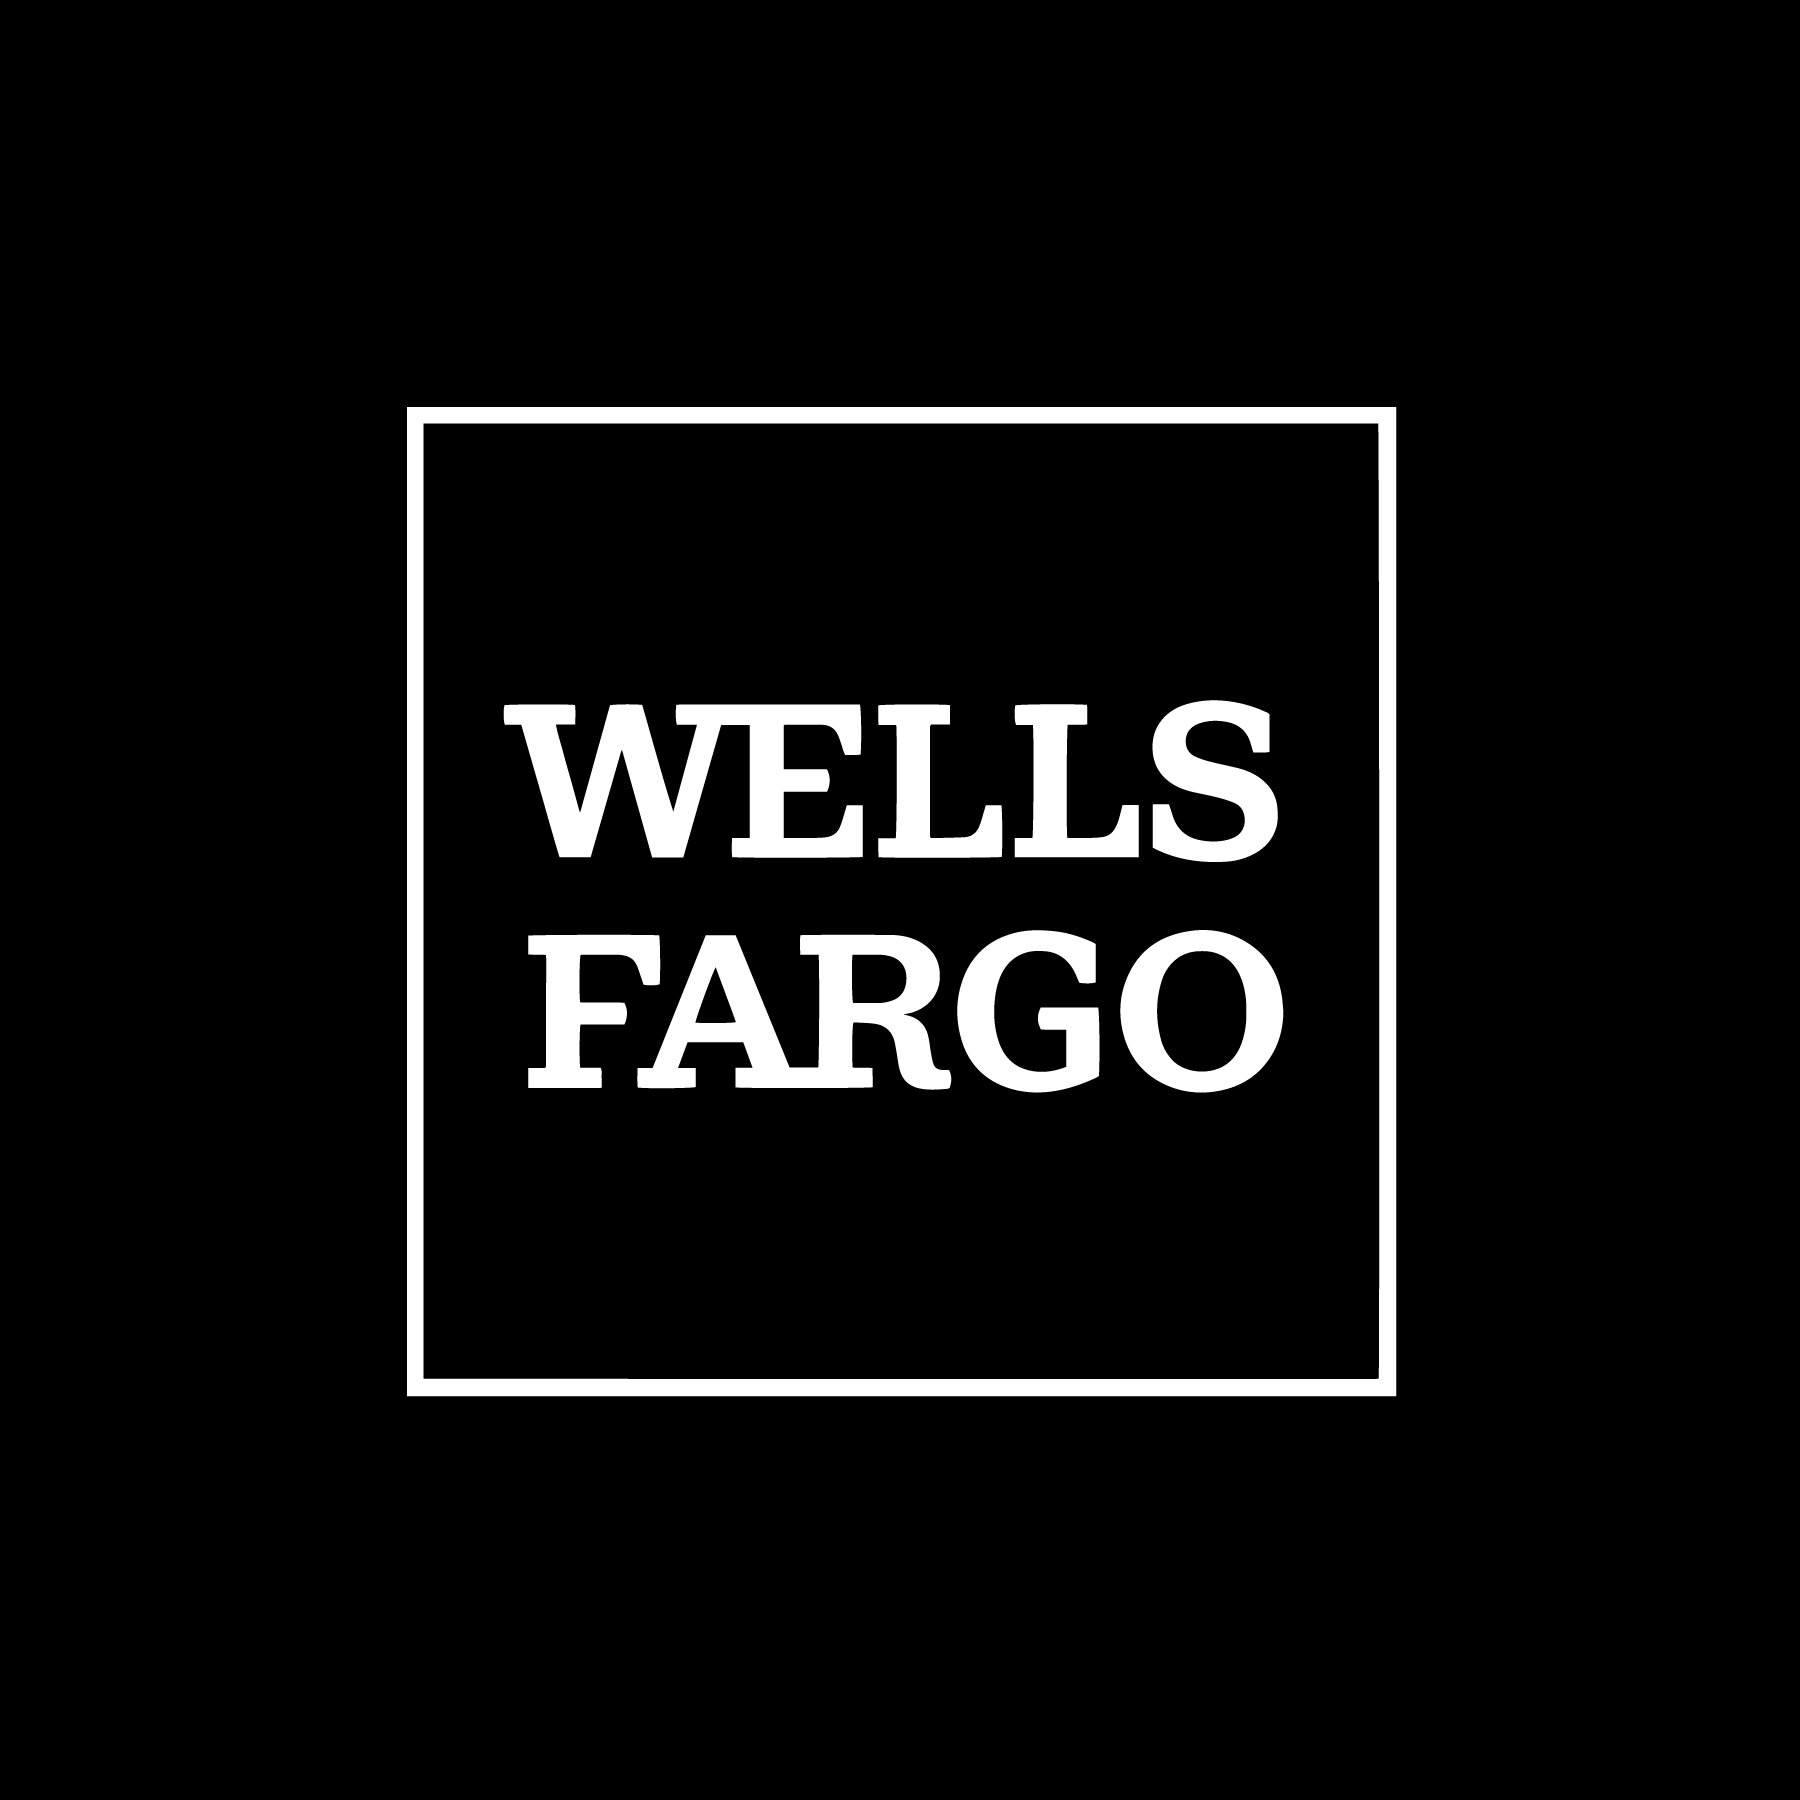 Wells Fargo B&W.png